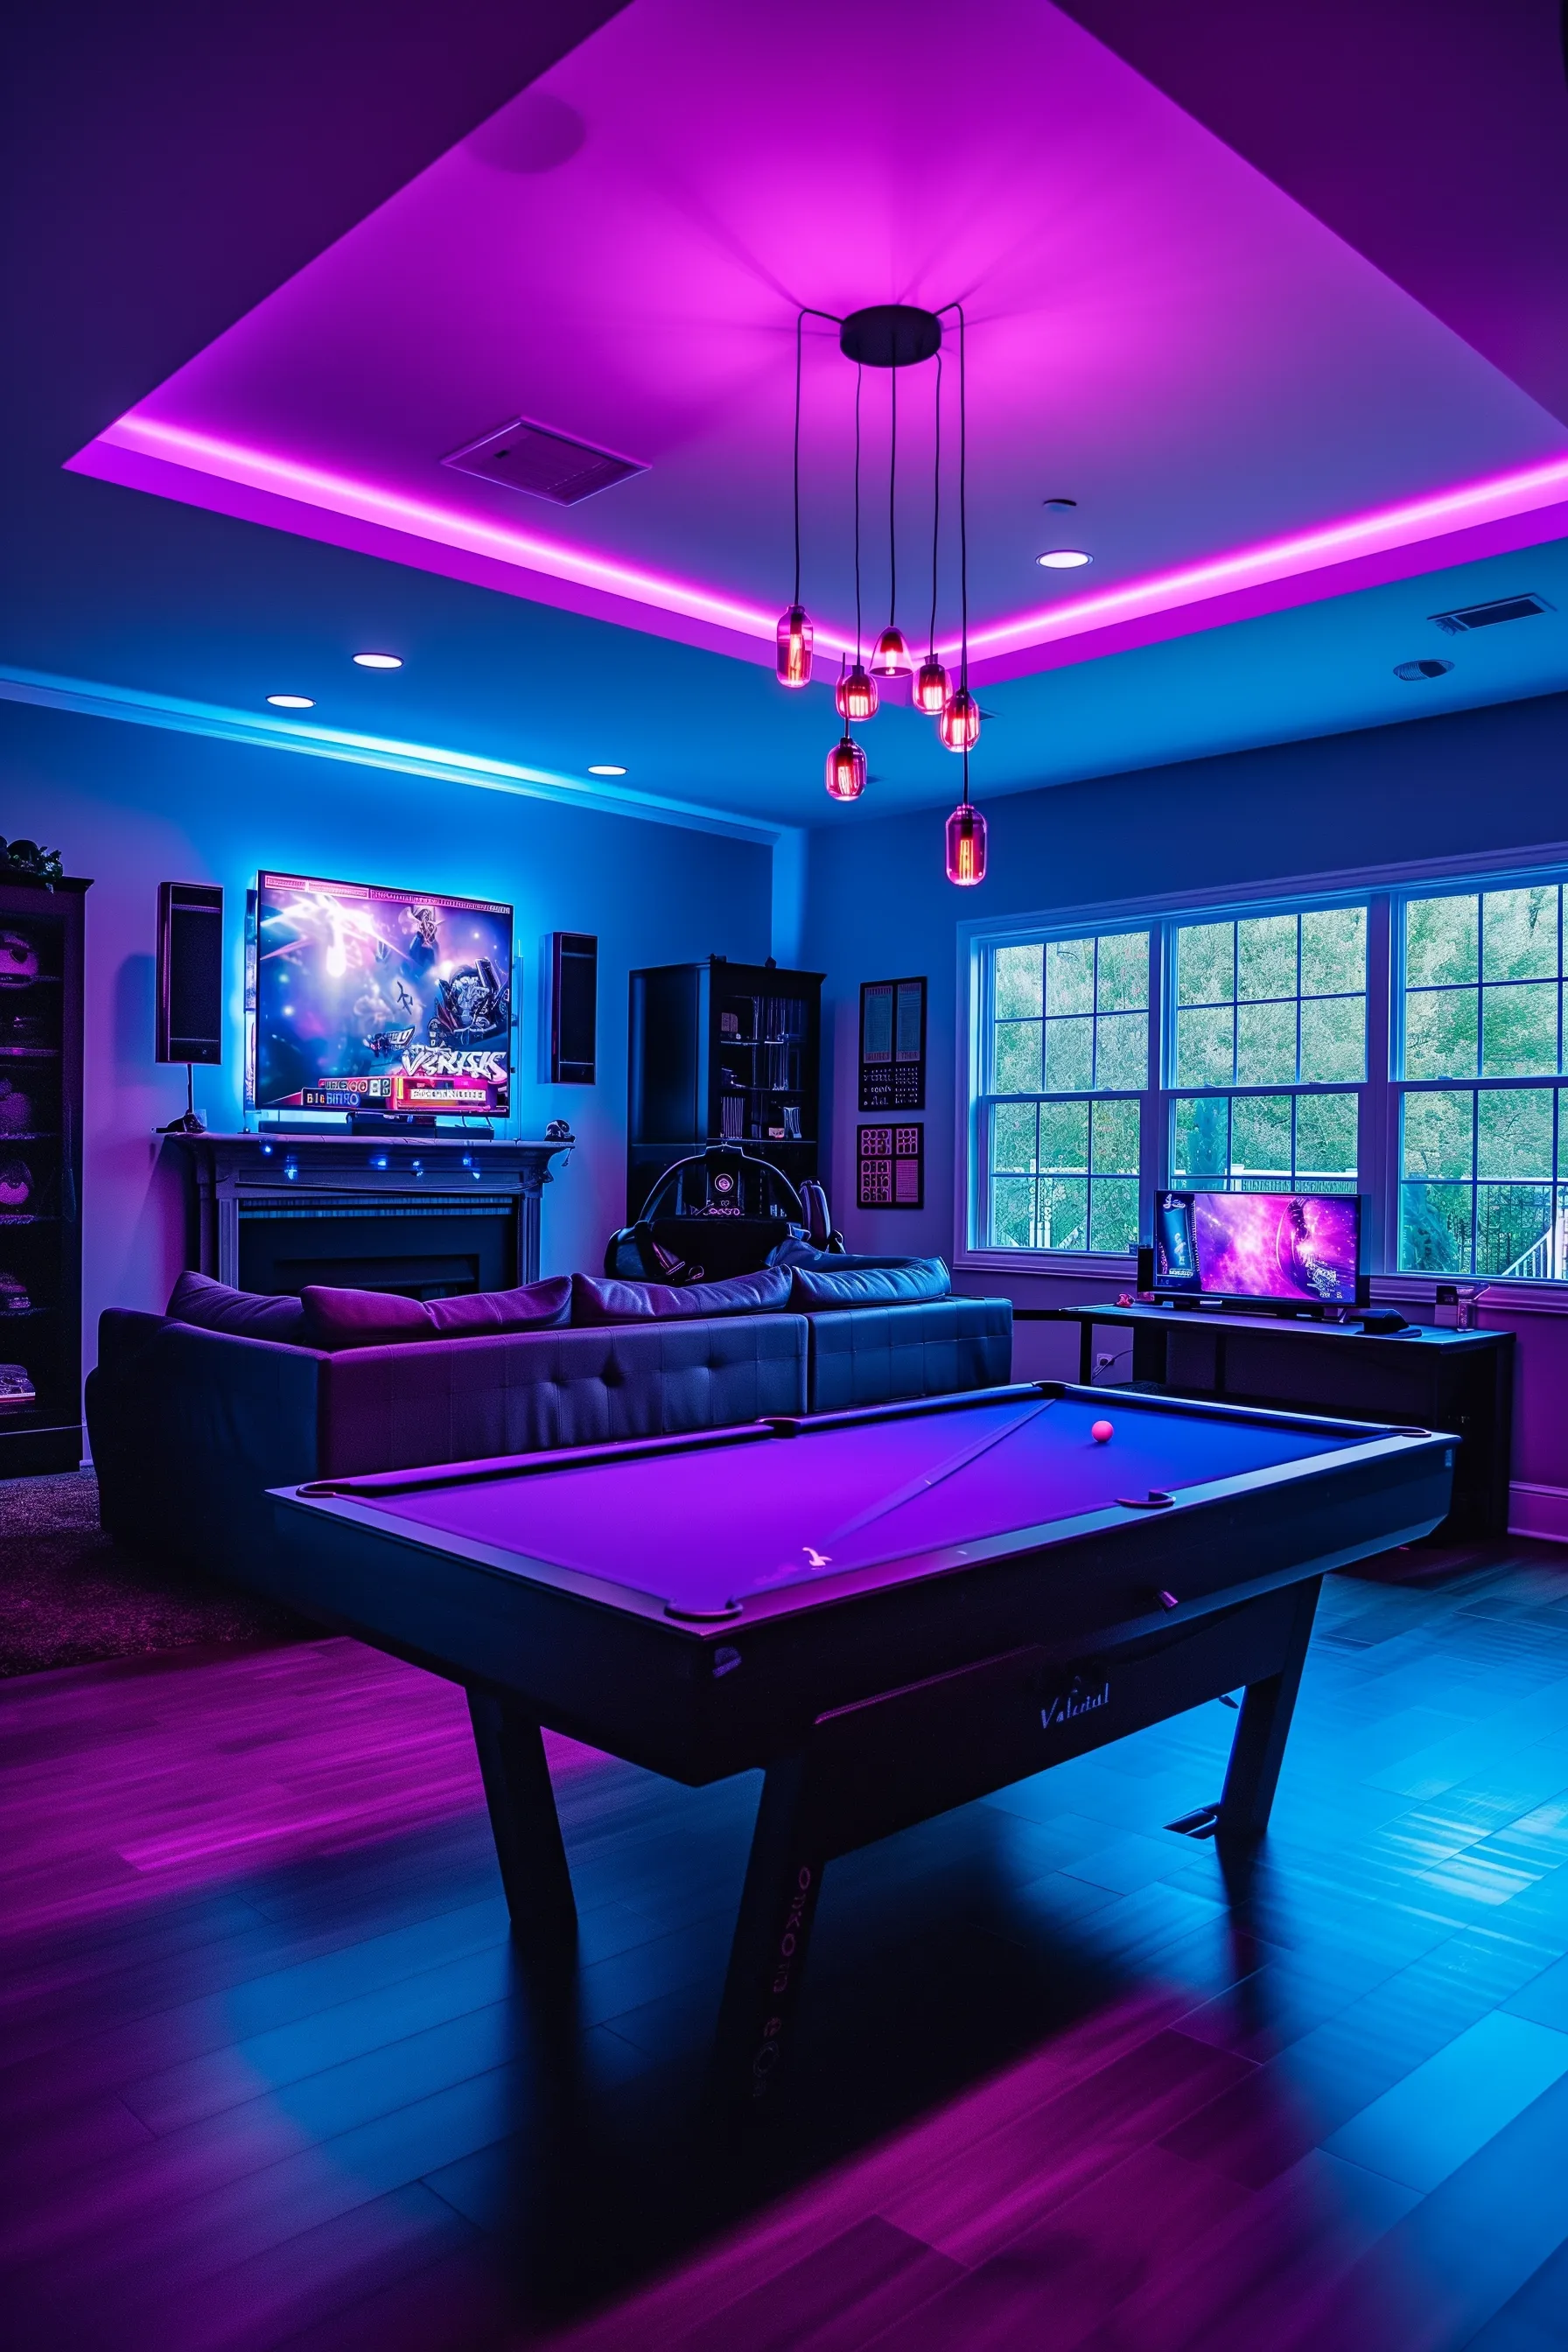 Pool table with purple LED lights